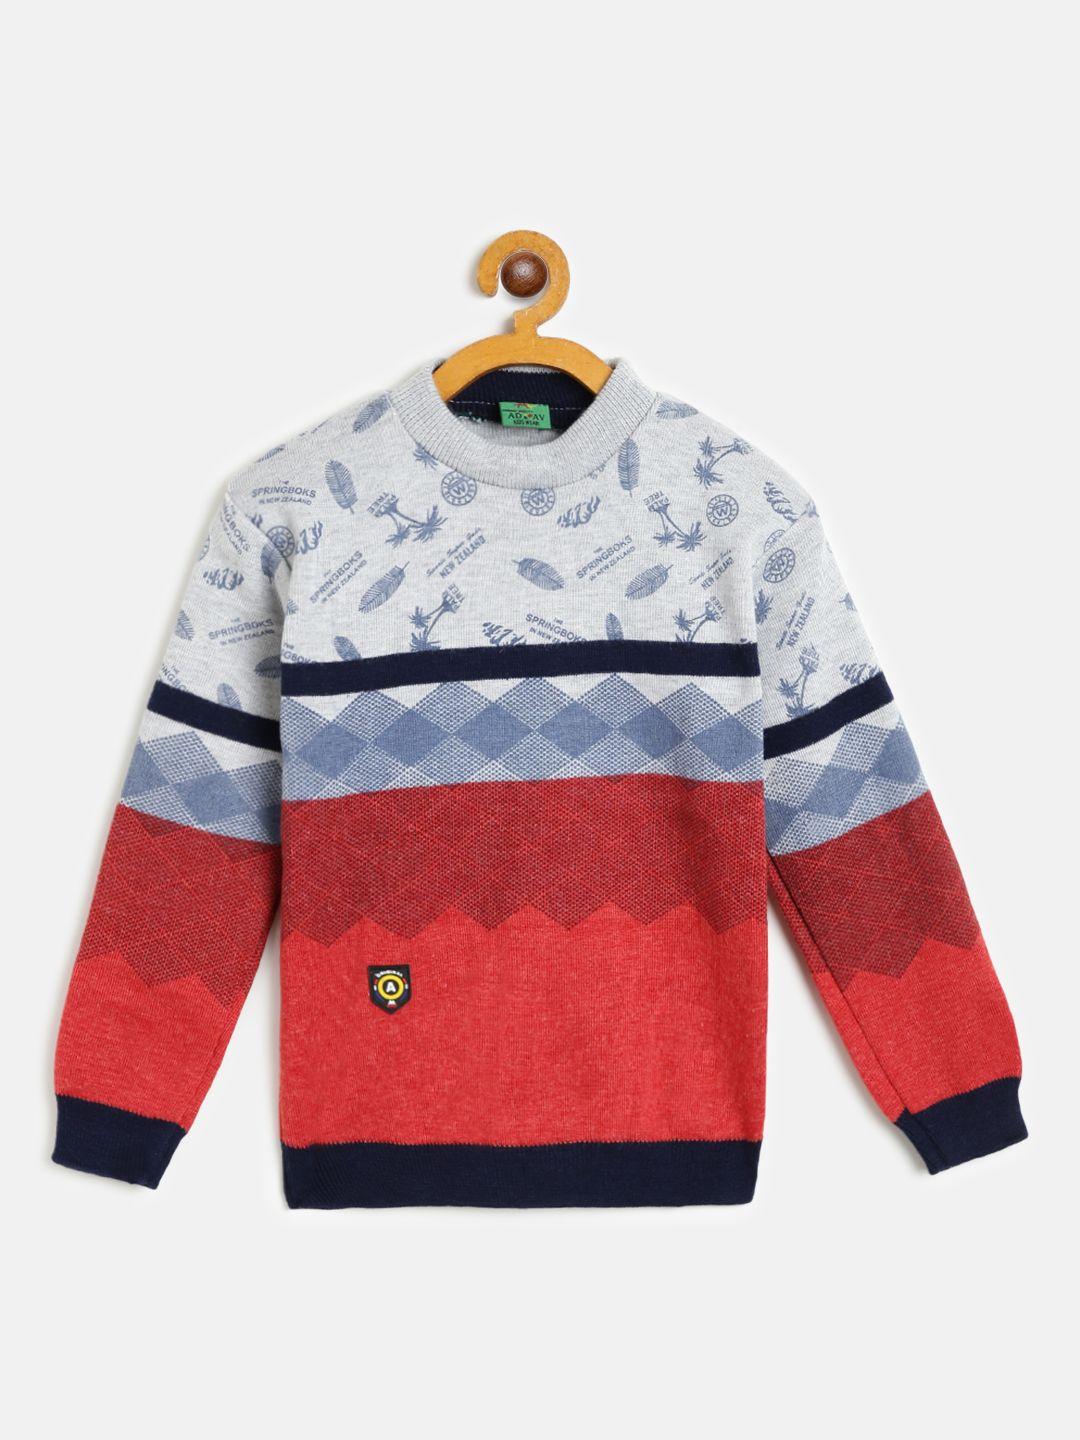 ad & av boys red & blue woollen geometric & tropical print pullover